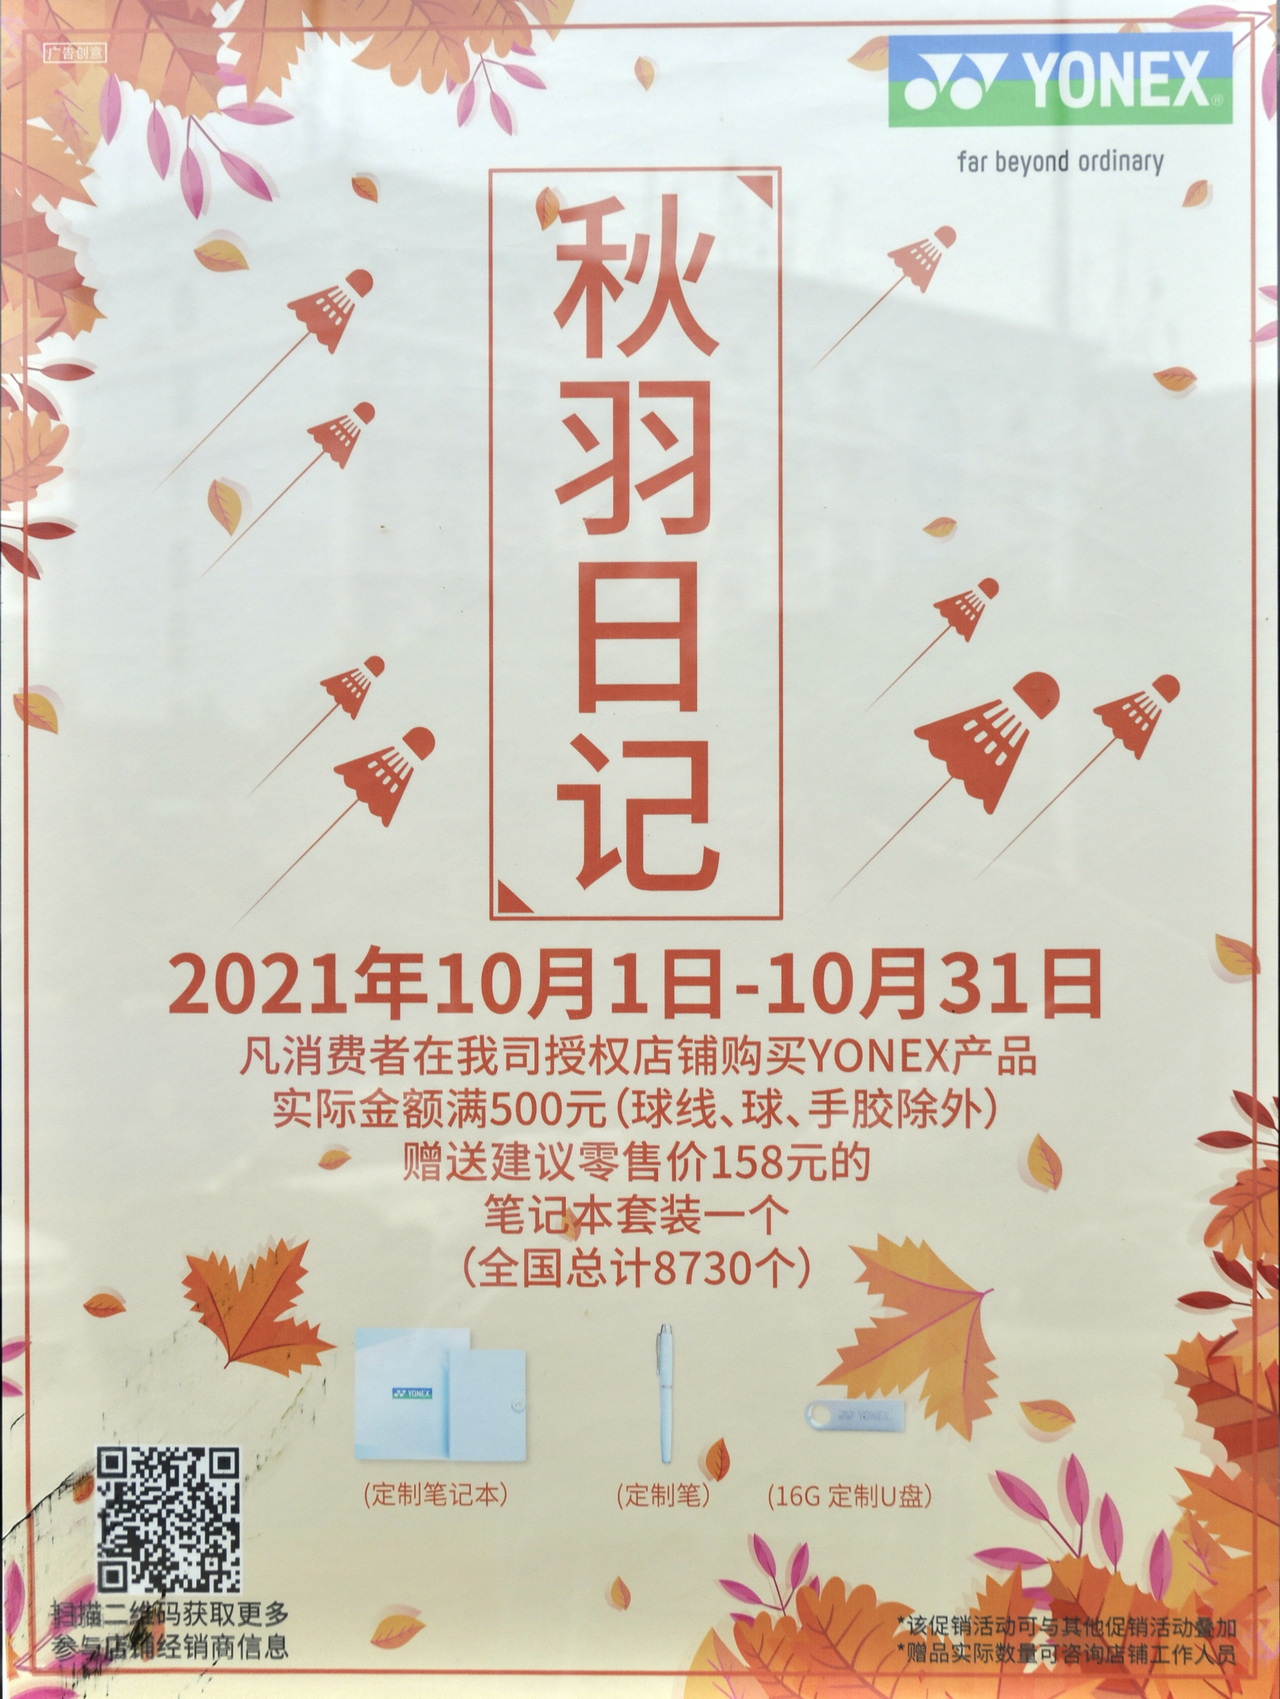 YONEX/尤尼克斯品牌促销“秋羽日记”活动开始了！